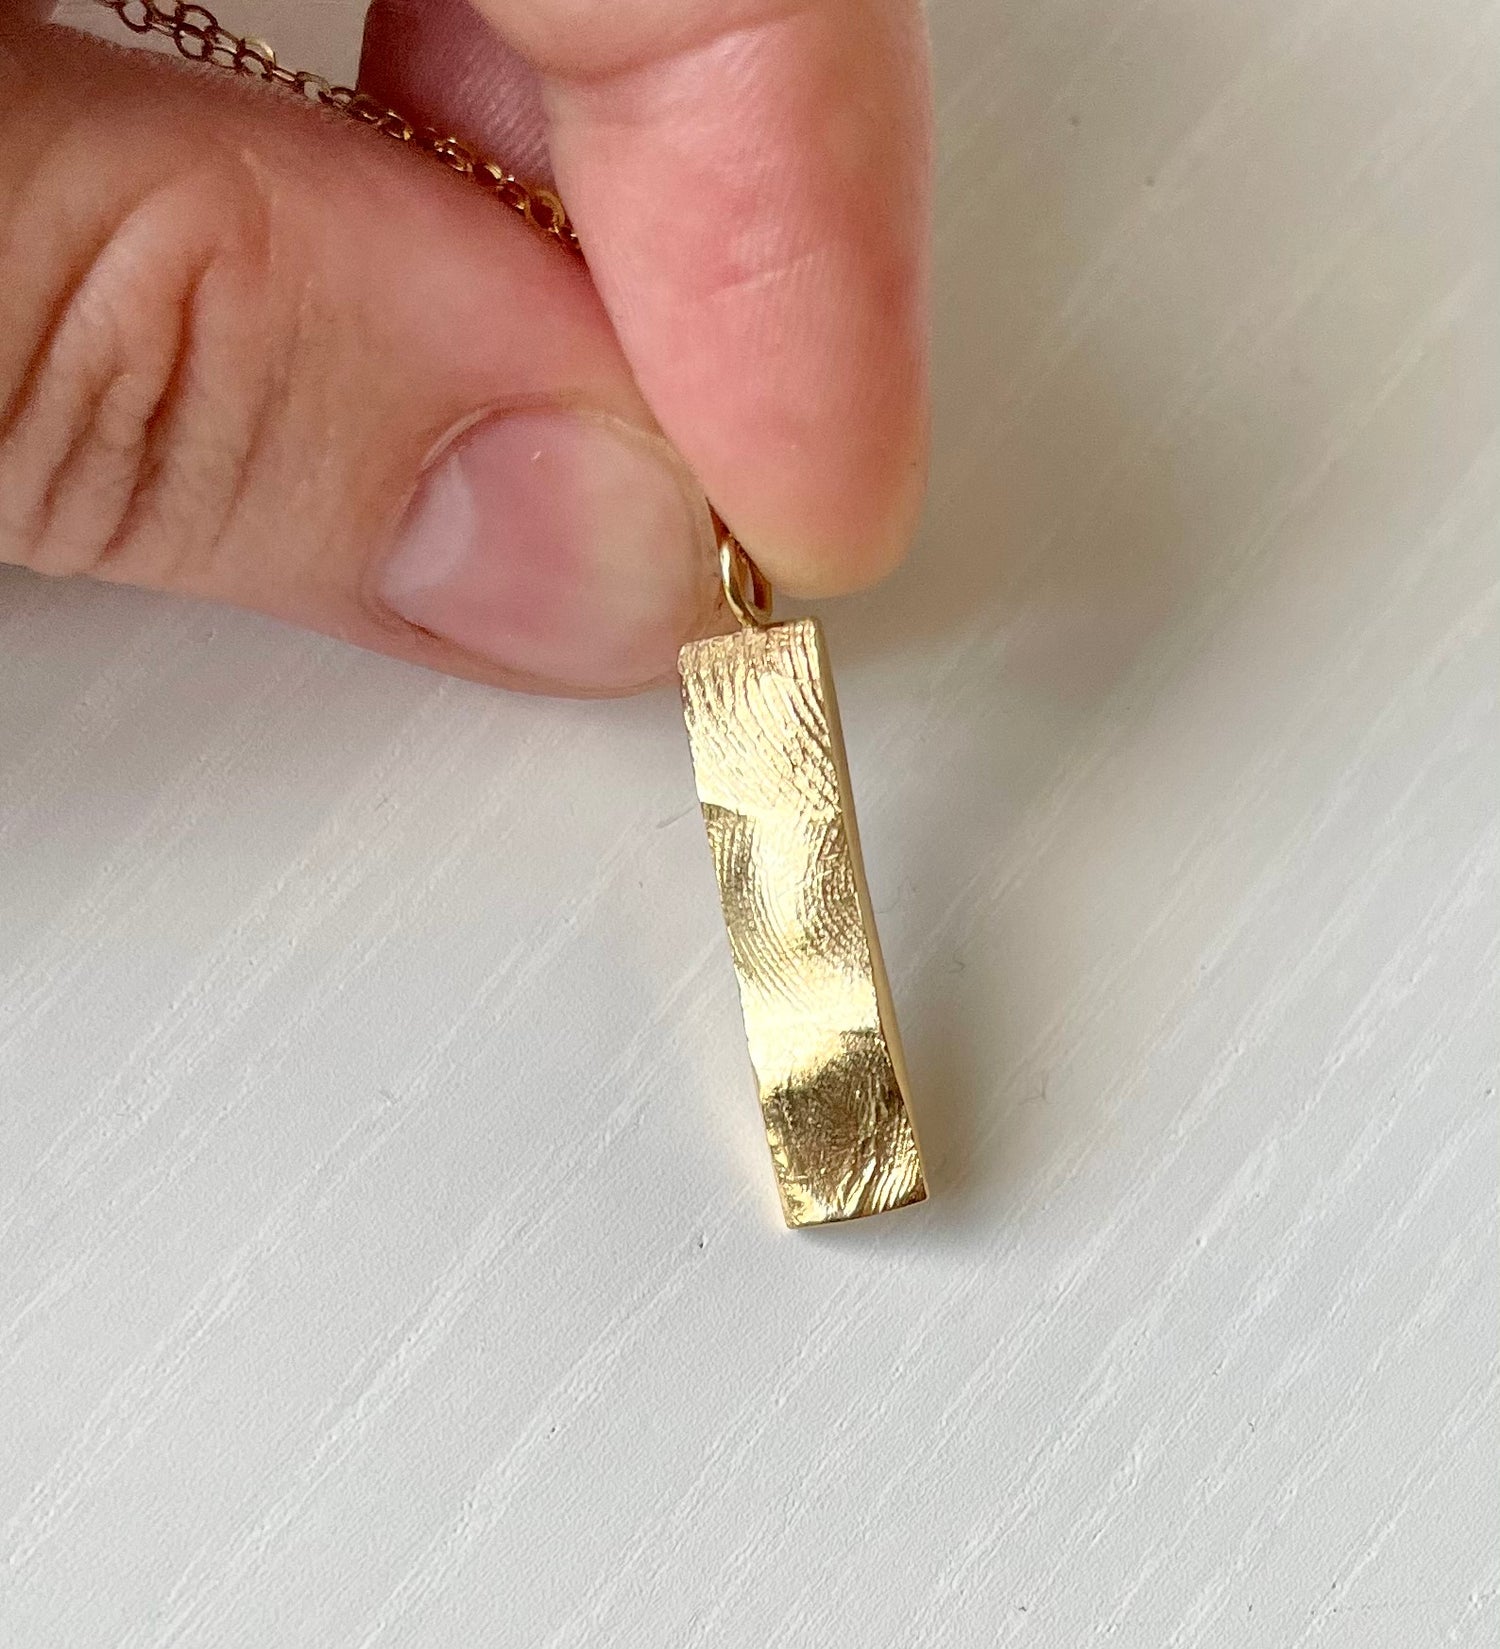 Family Bar Fingerprint Pendant - 9ct Gold - Fingerprint Impression Kit + Necklace